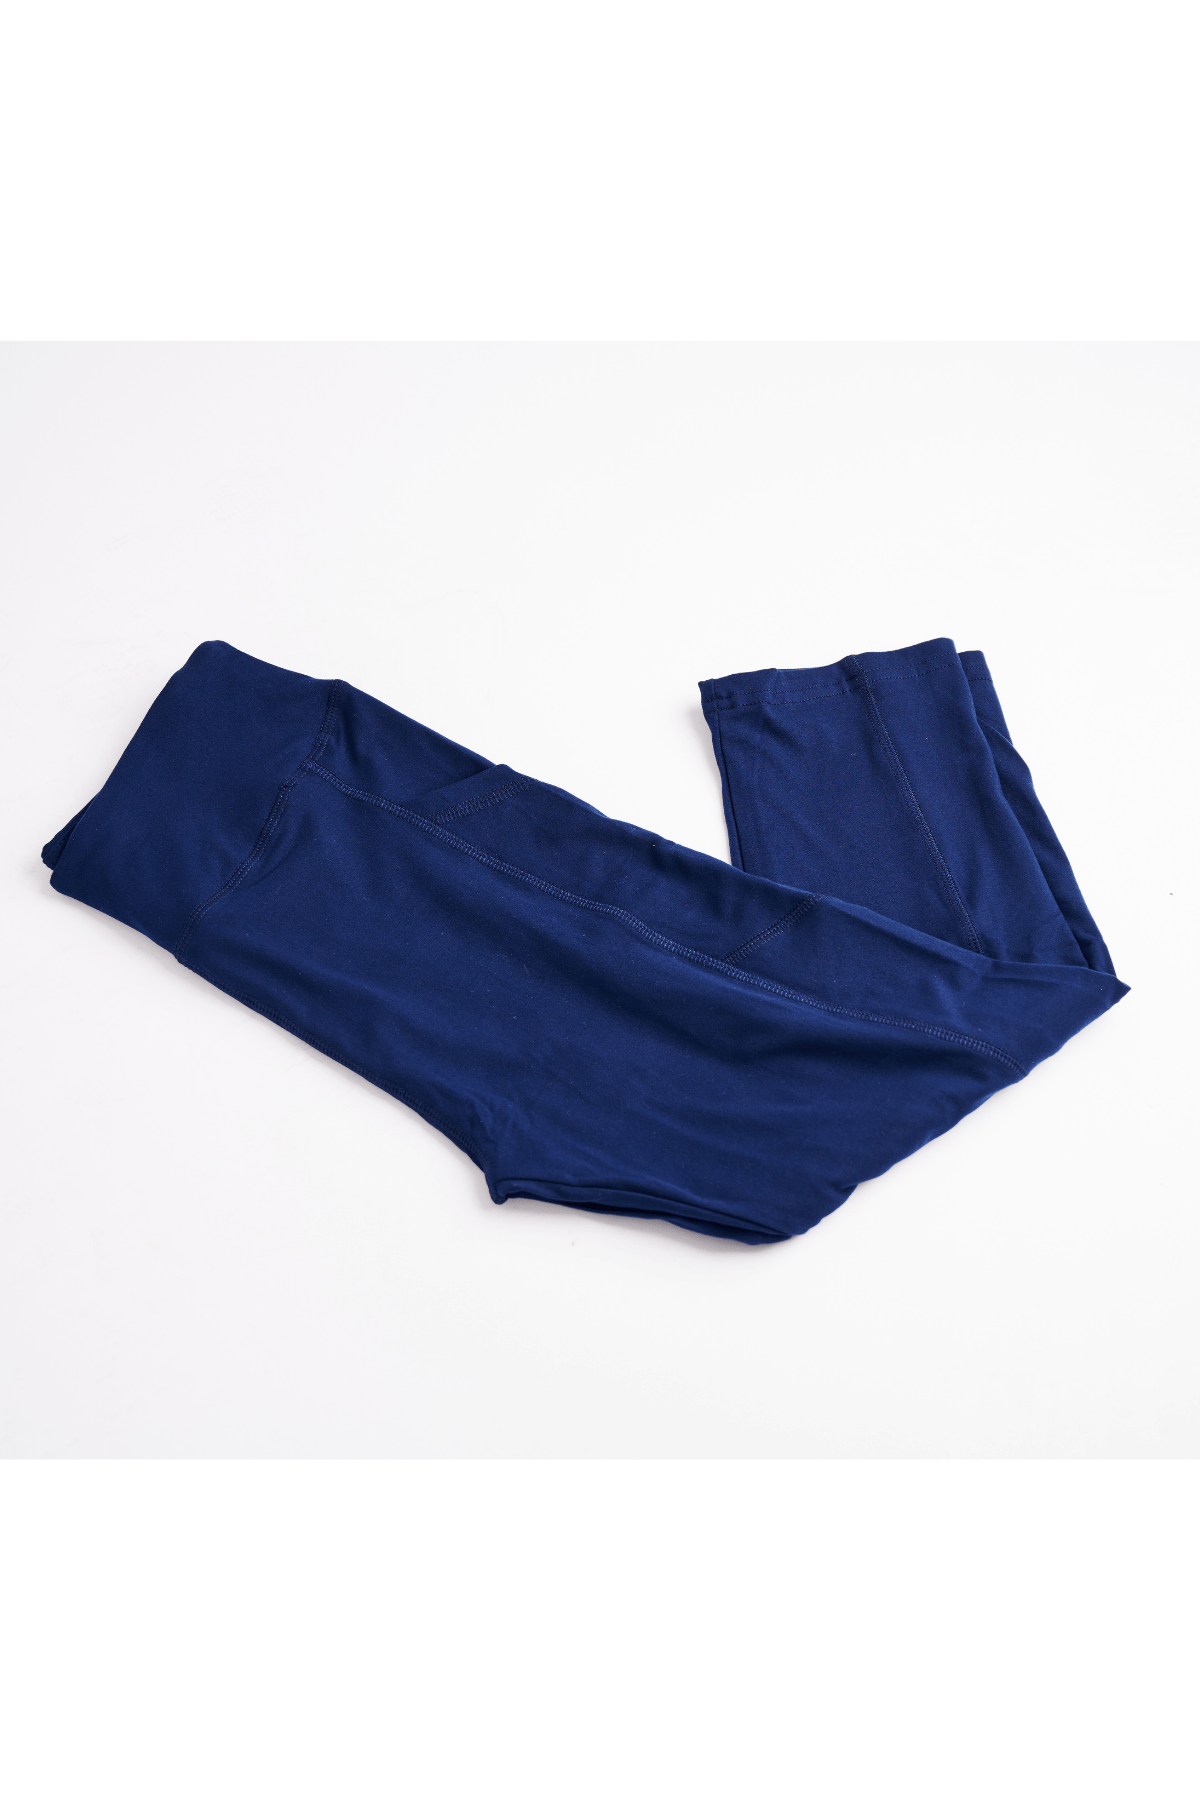 oolala Capri Solid Capri with Pockets 🦋 oolala ButterflySoft™ | Solid Capri with Pockets Women's Leggings#color_navy